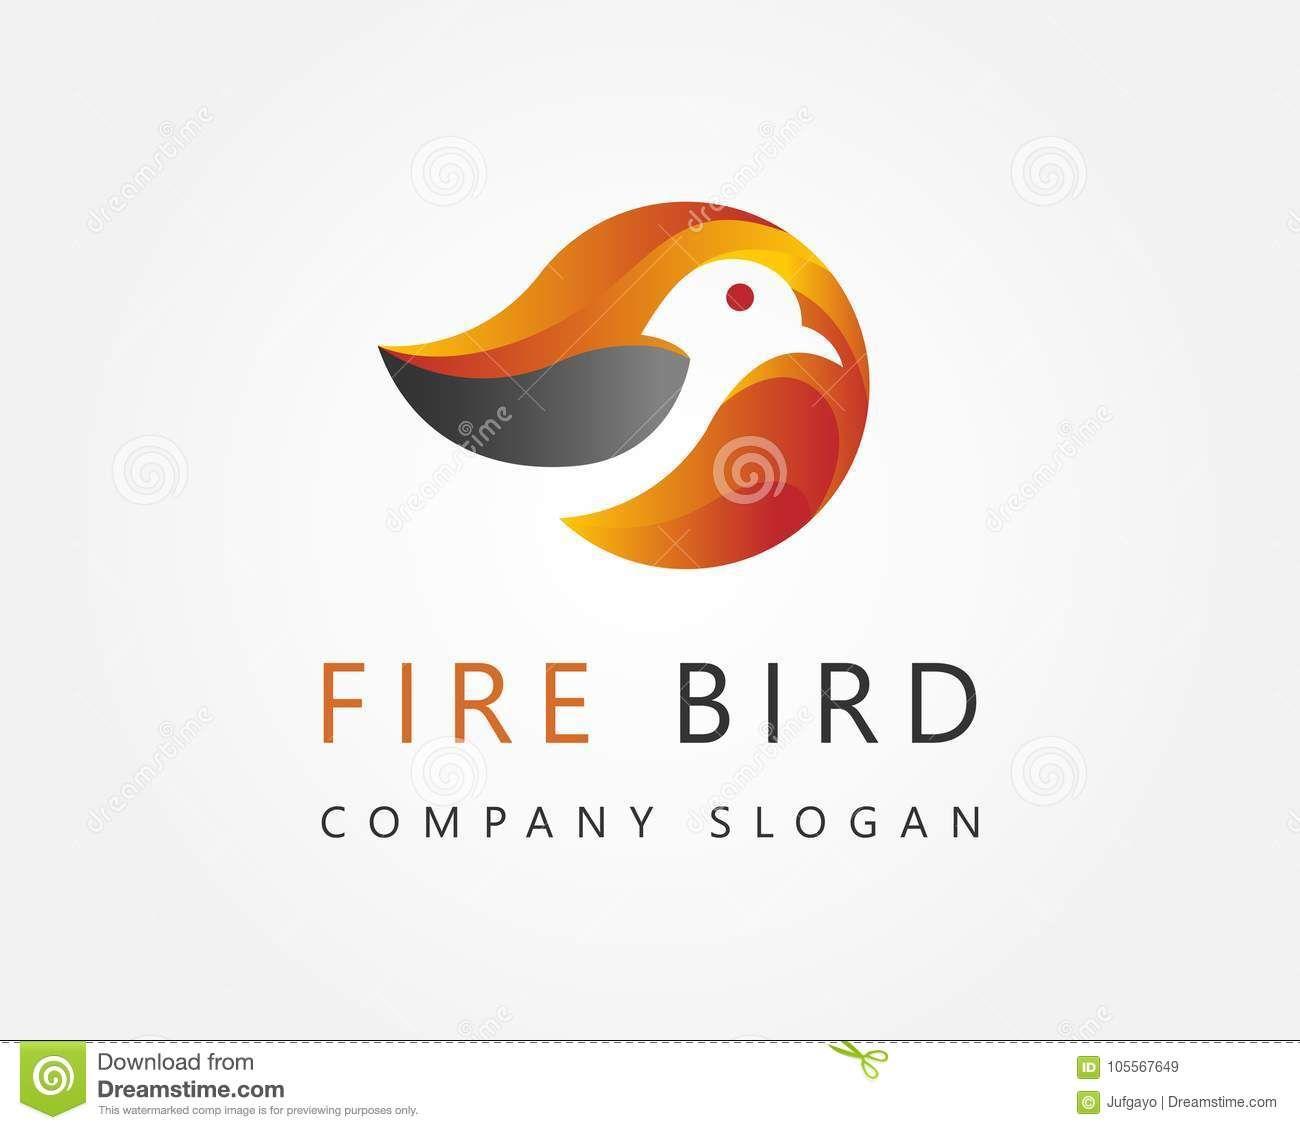 Orange Bird Company Logo - Pin by Jufri Gayo on logo inspiration | Pinterest | Logos, Logo ...